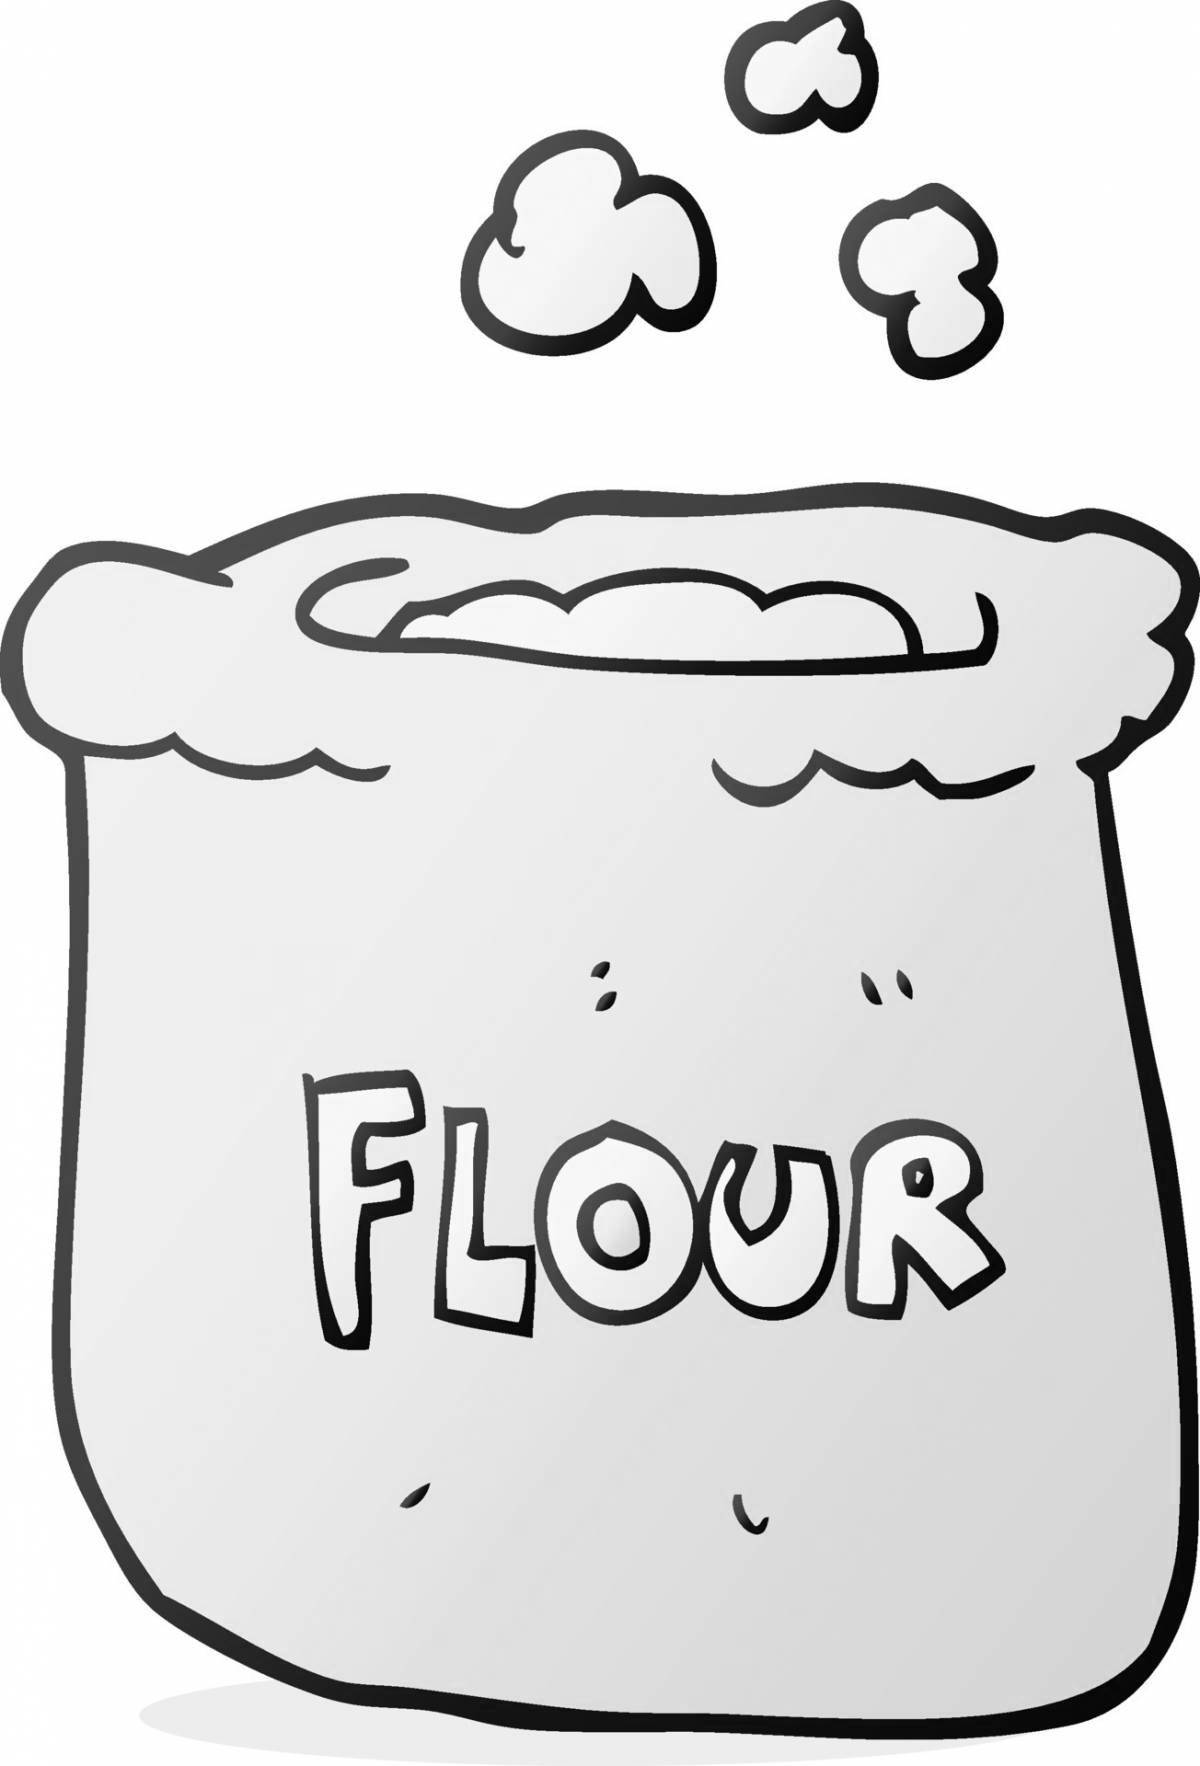 Chocolate flour coloring book for schoolchildren